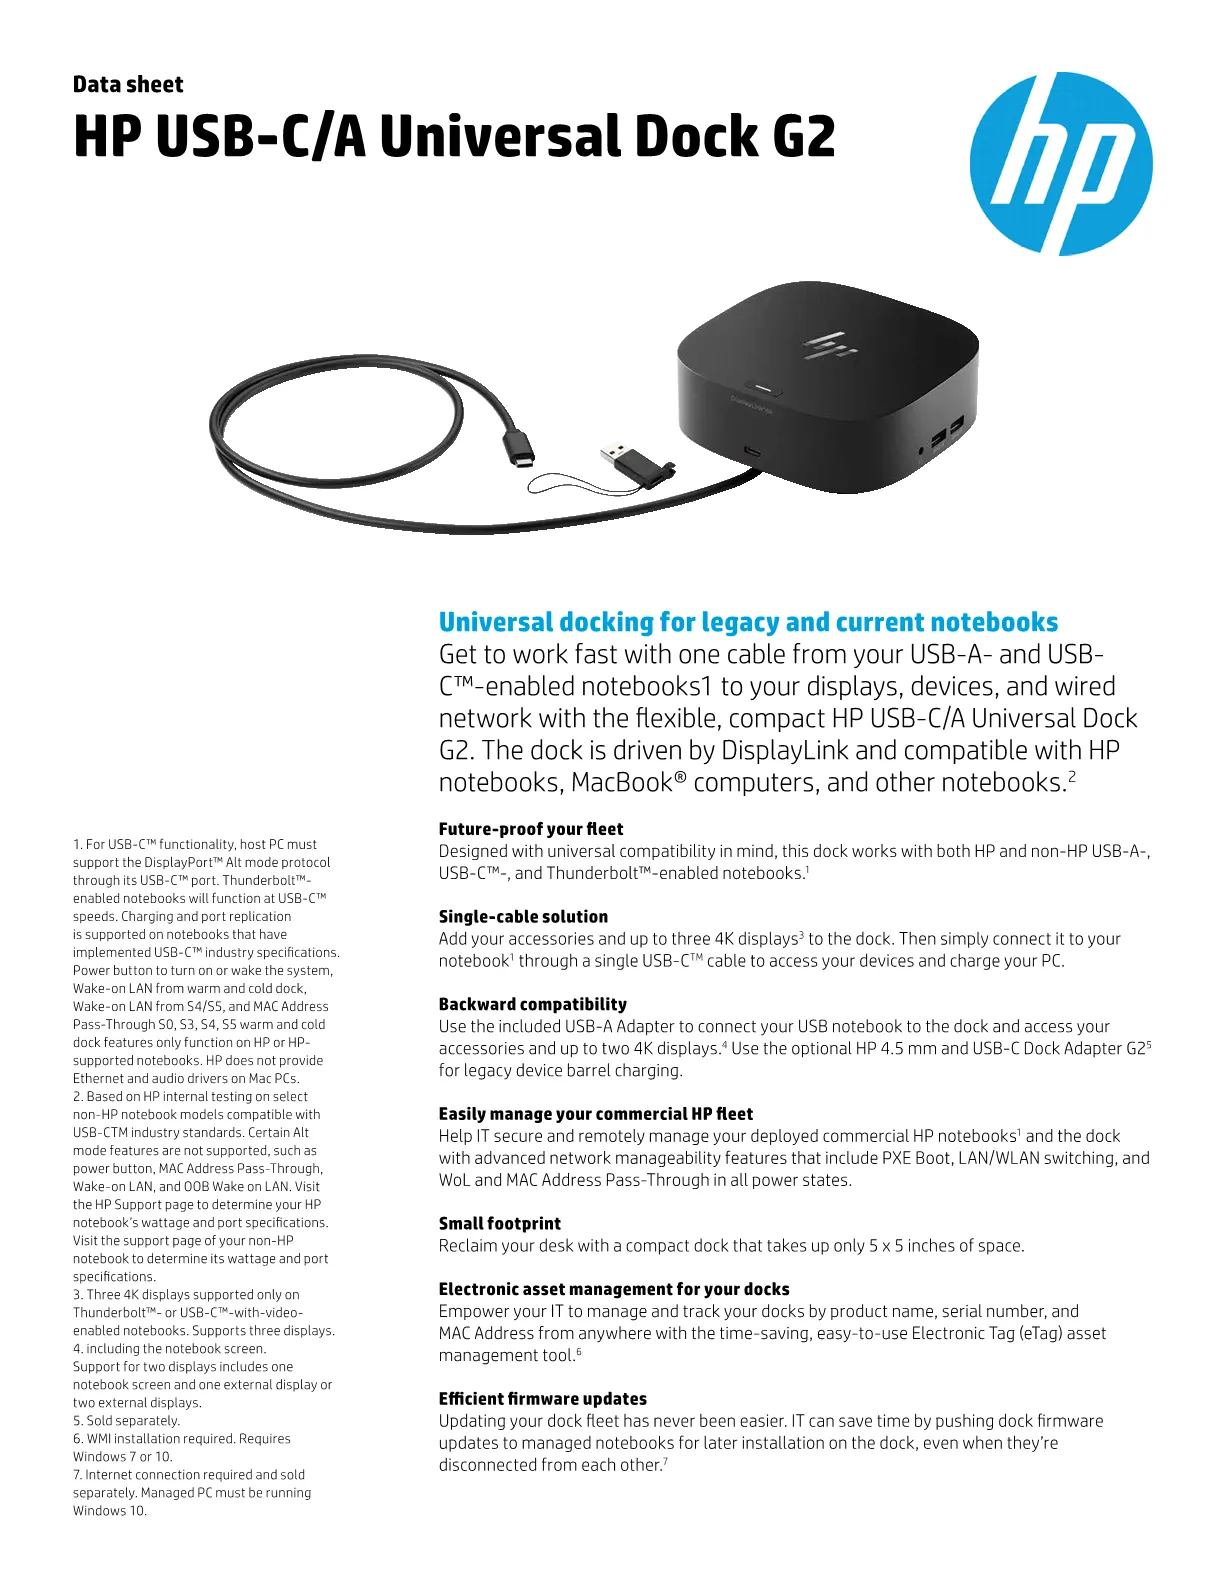 HP USB-C/A UNIVERSAL DOCK G2 - 5TW13AA